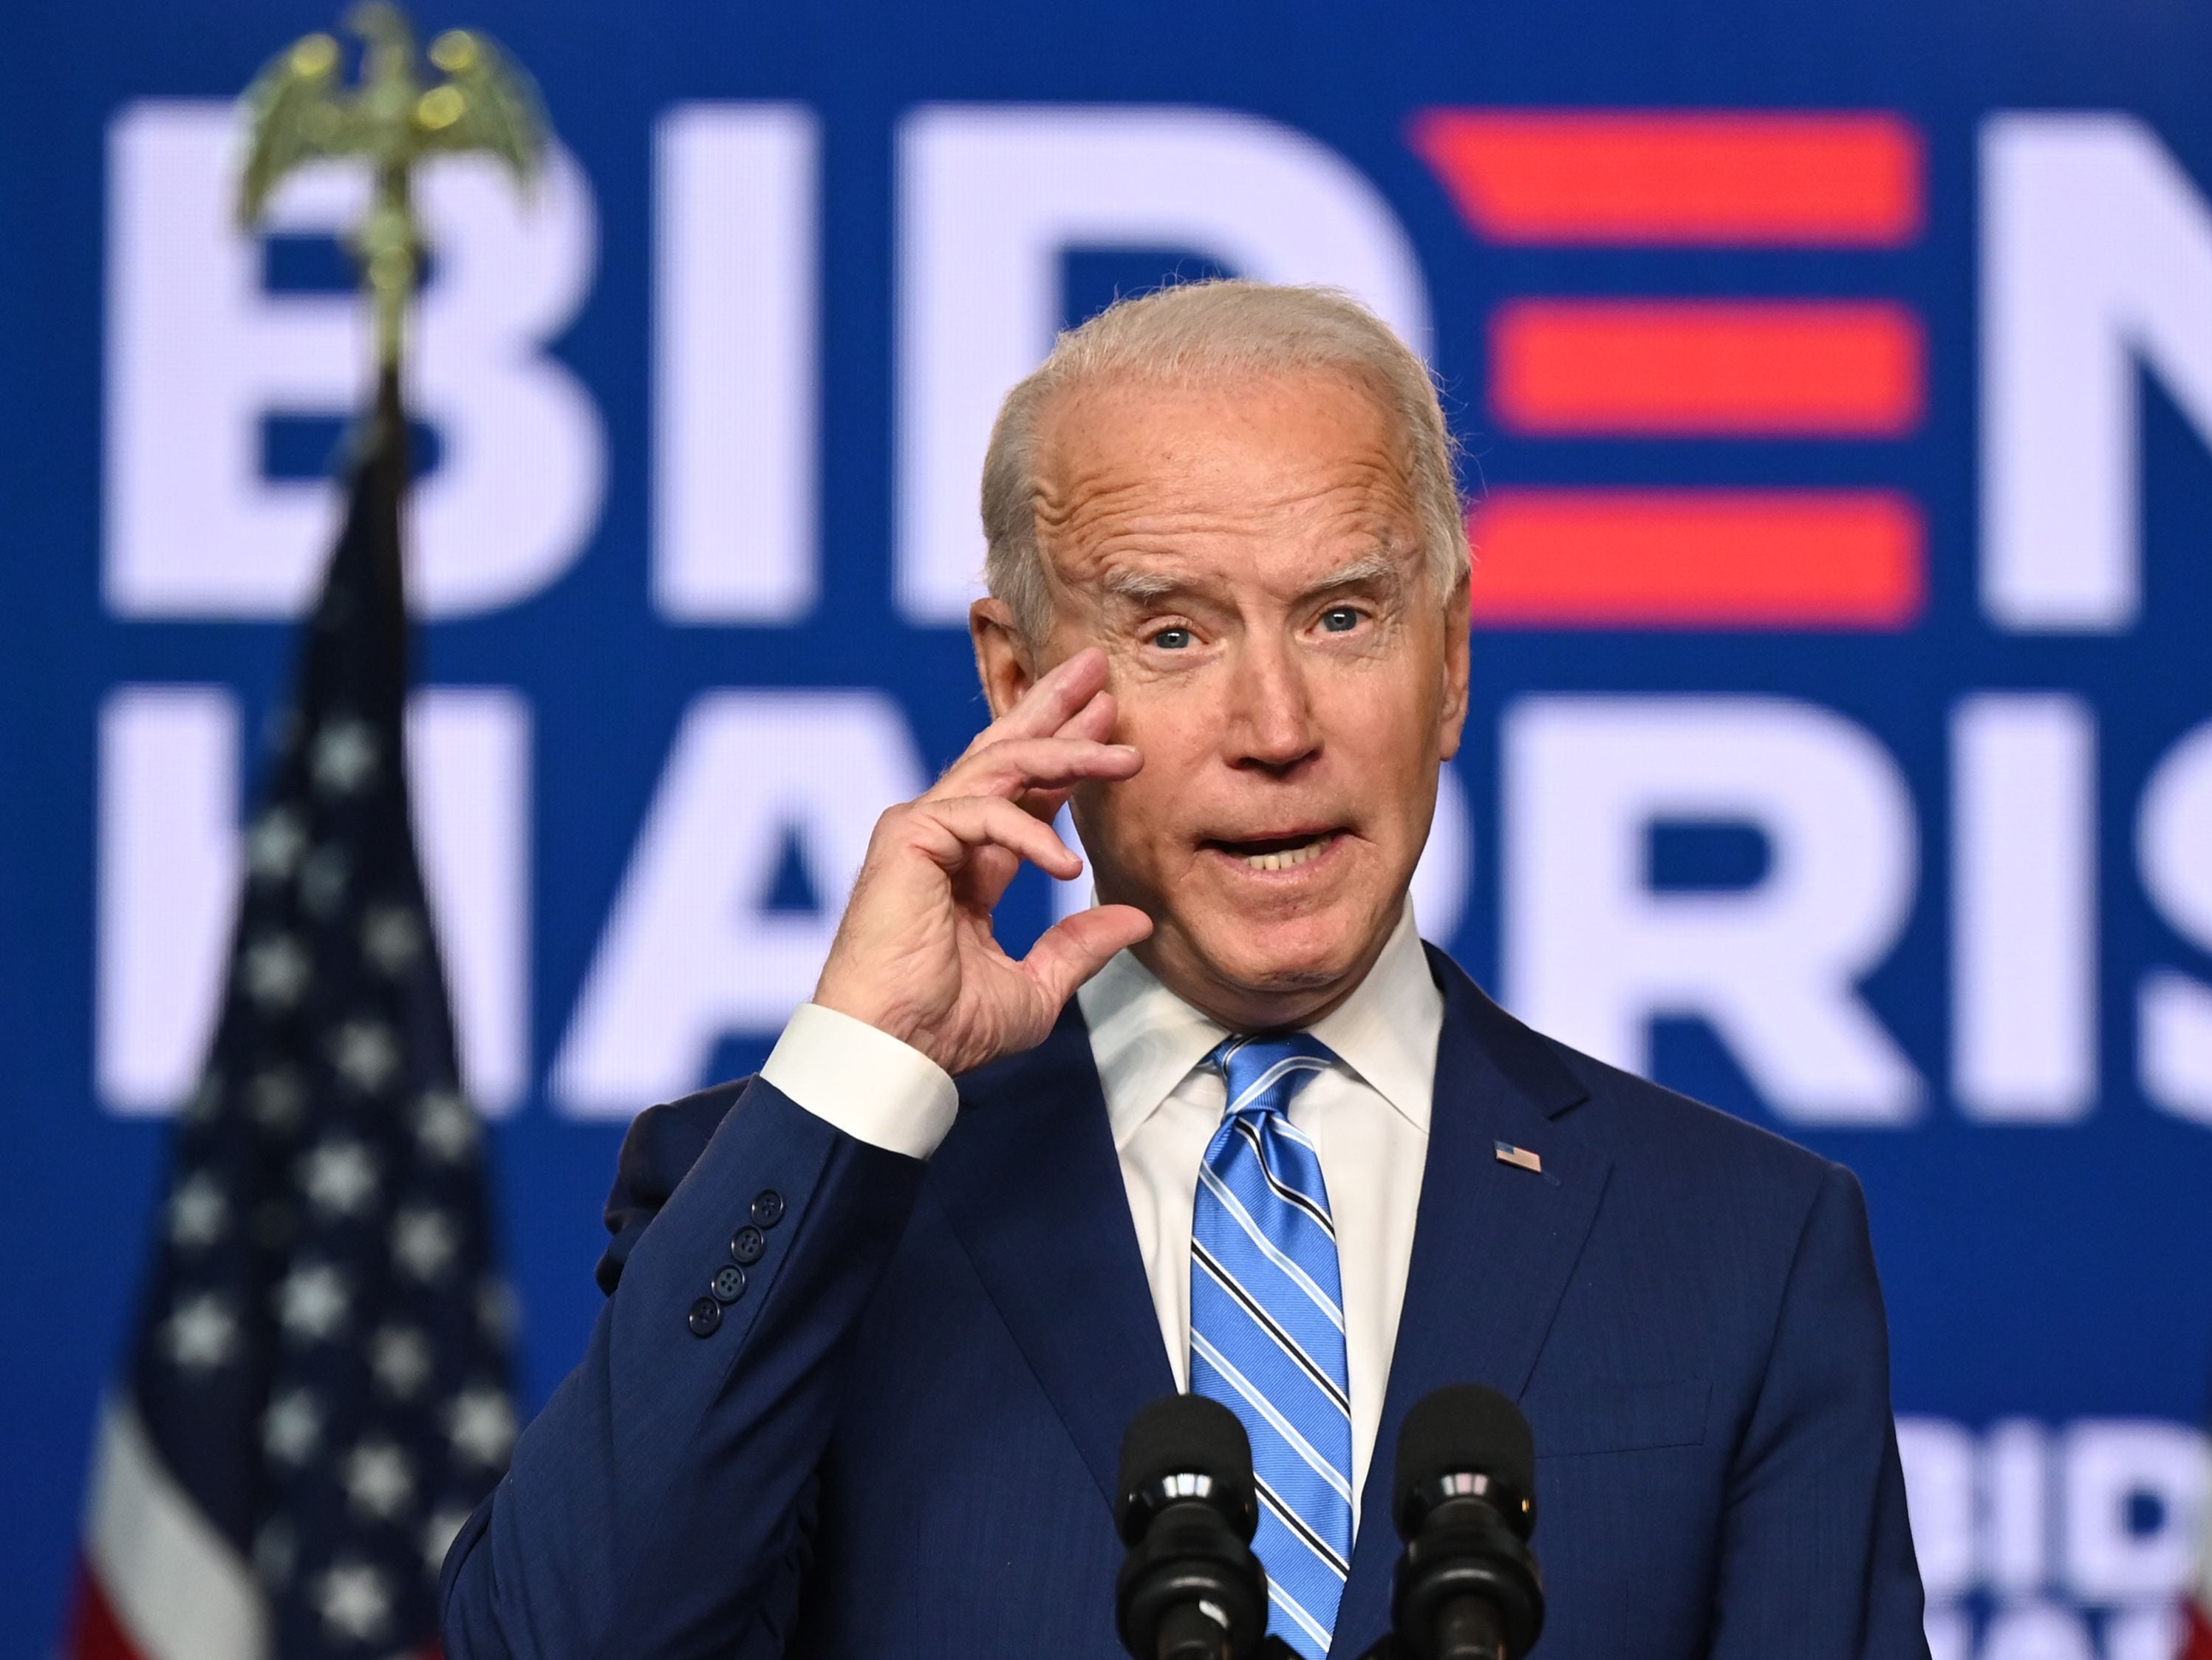 Joe Biden, the Democratic presidential nominee, on Wednesday